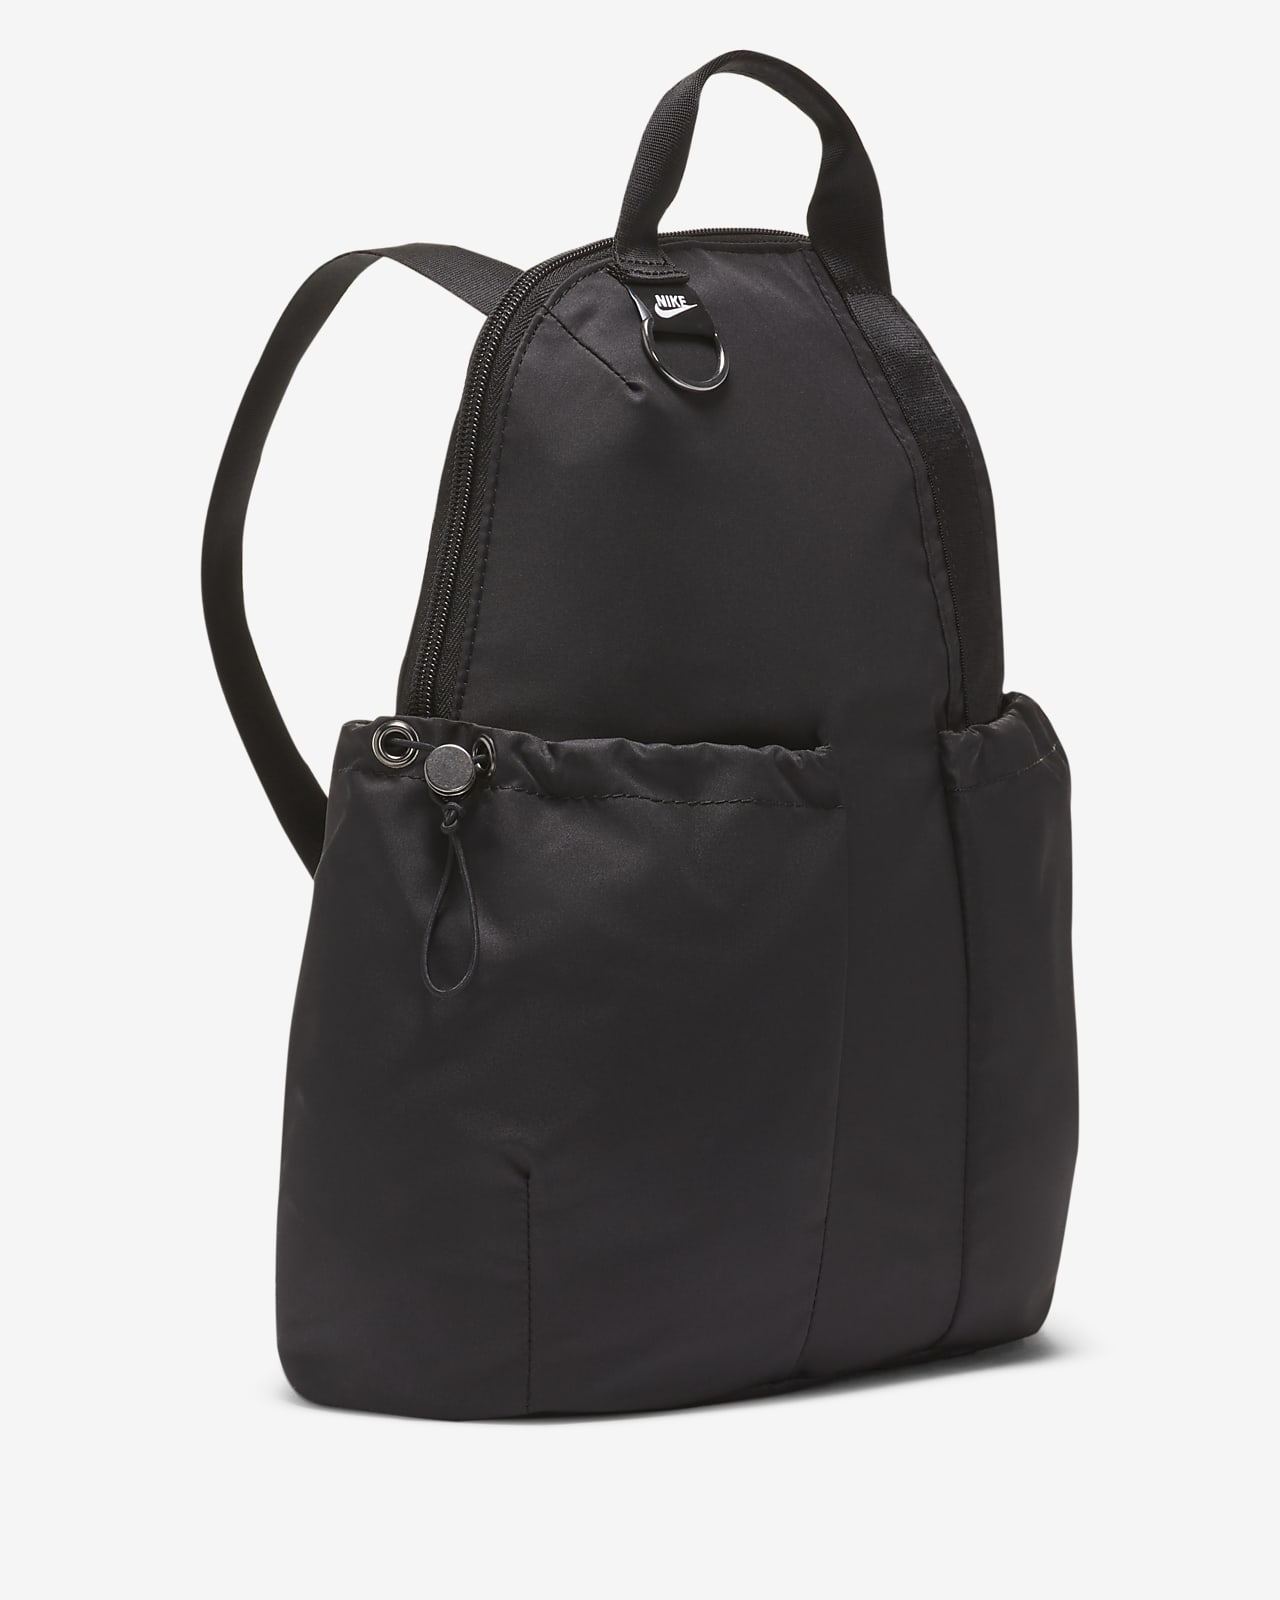 Handbags Nike One Luxe • shop